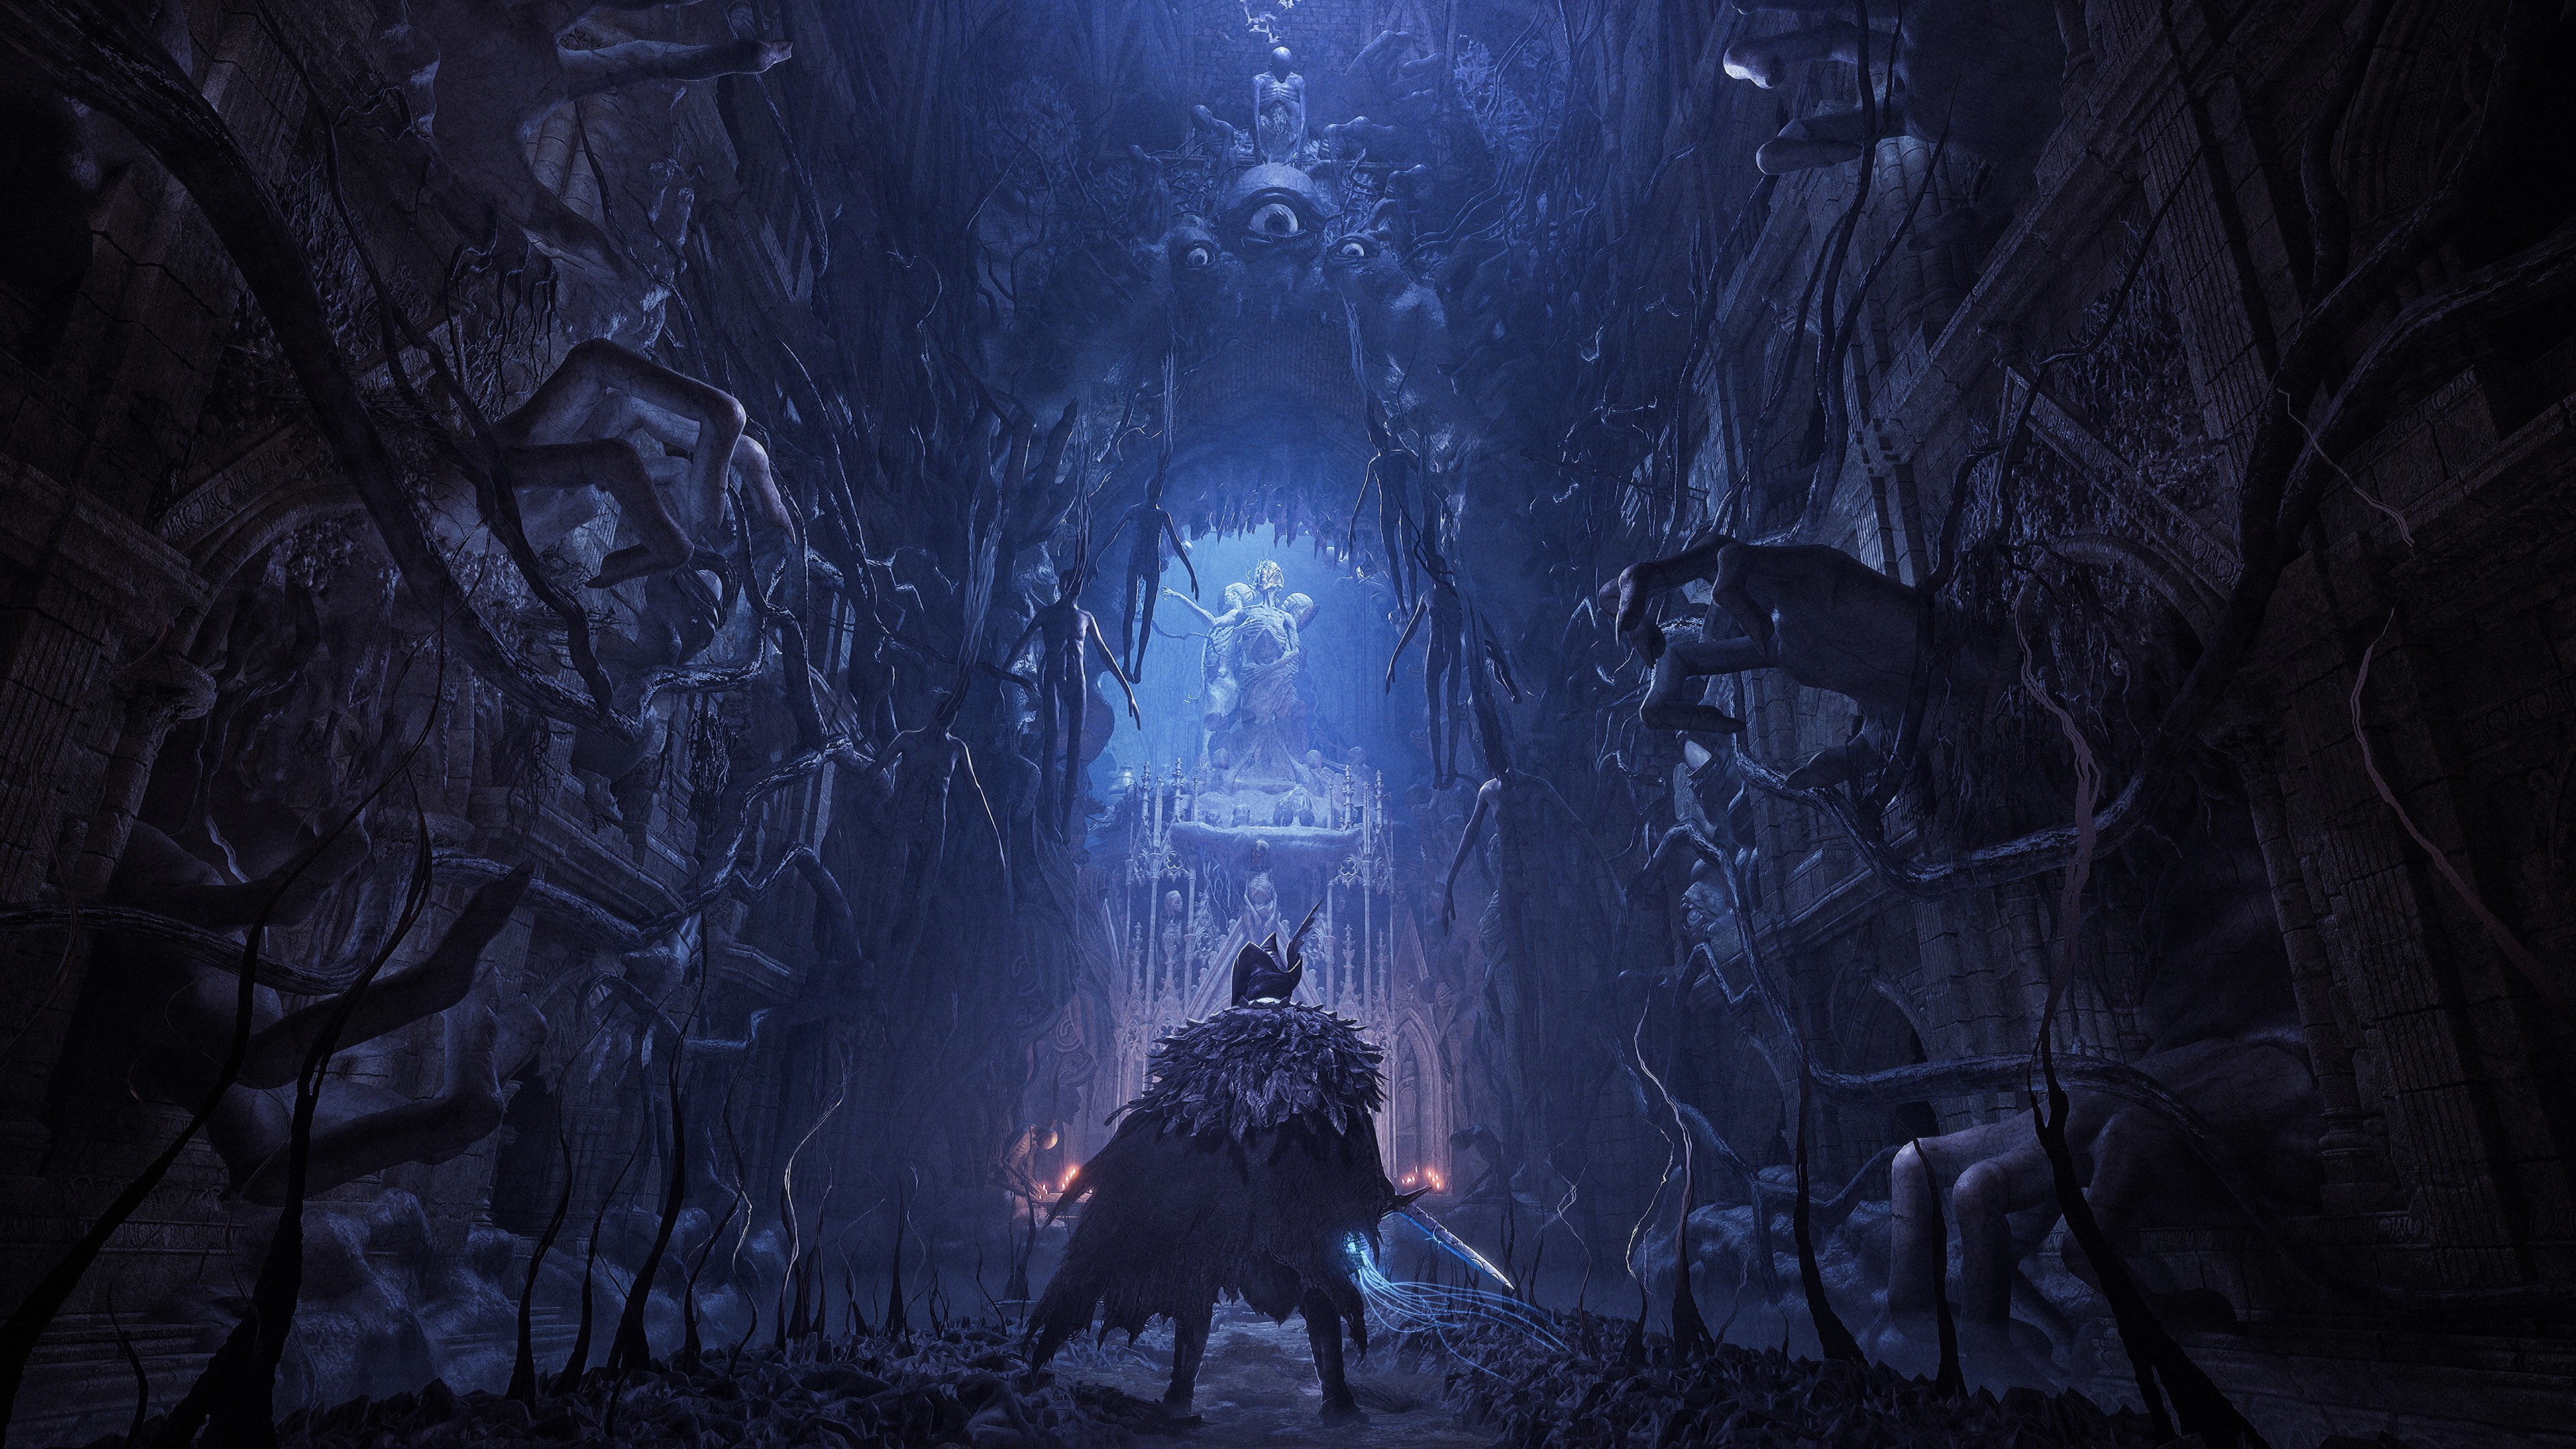 Lords Of The Fallen (2023) - Pre-Order Bonus DLC EU Xbox Series X,S CD Key